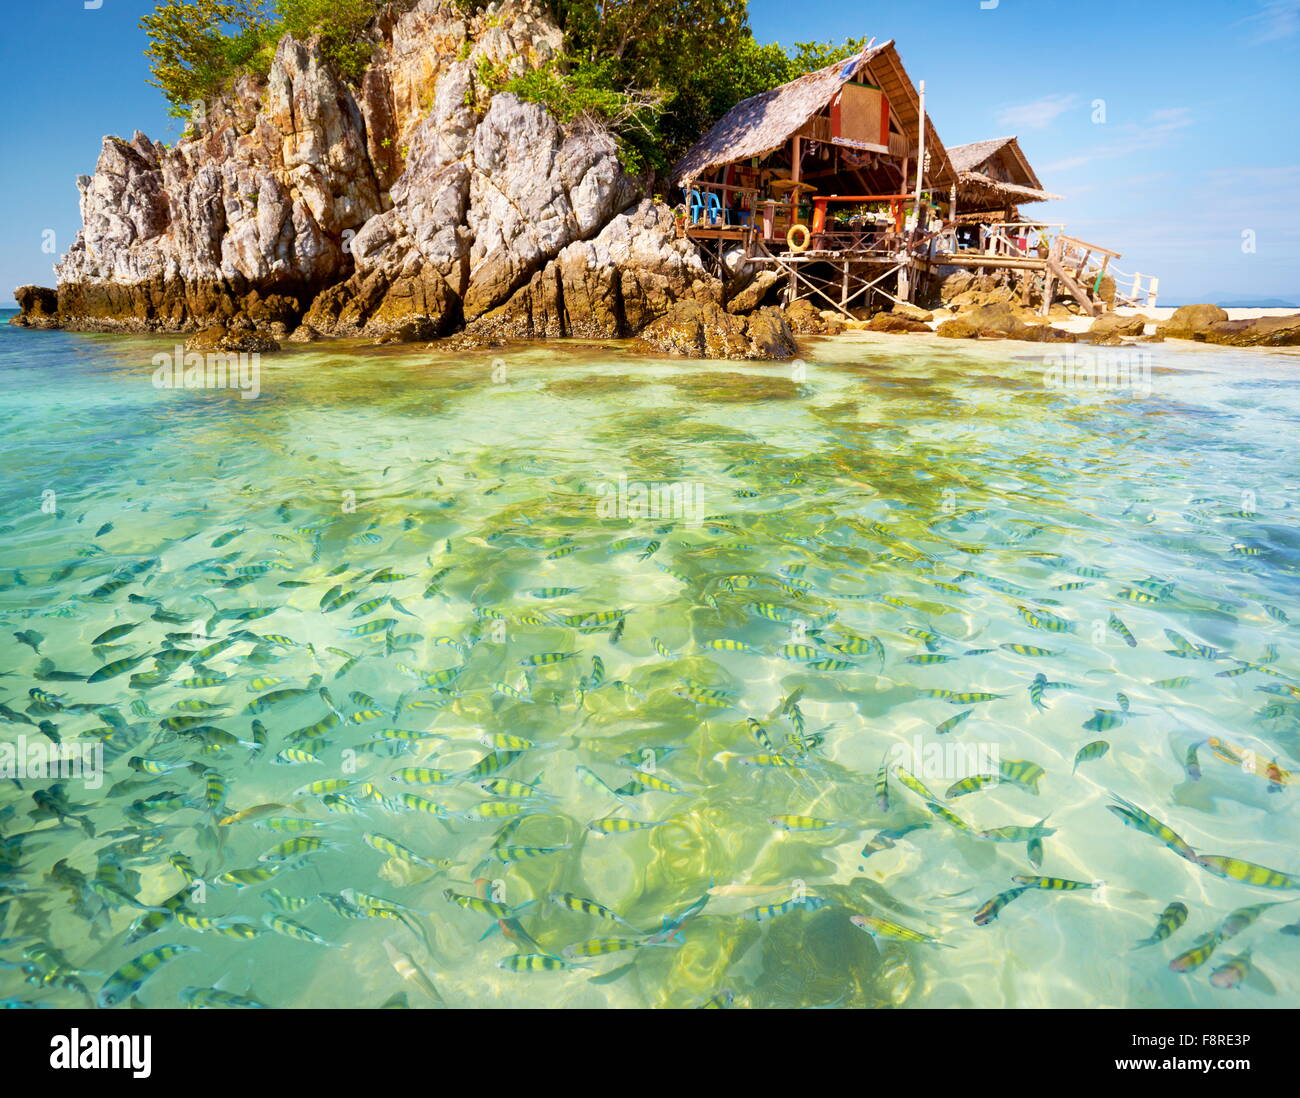 Thailandia - Baia di Phang Nga, Khai Island, il Mare delle Andamane Foto Stock